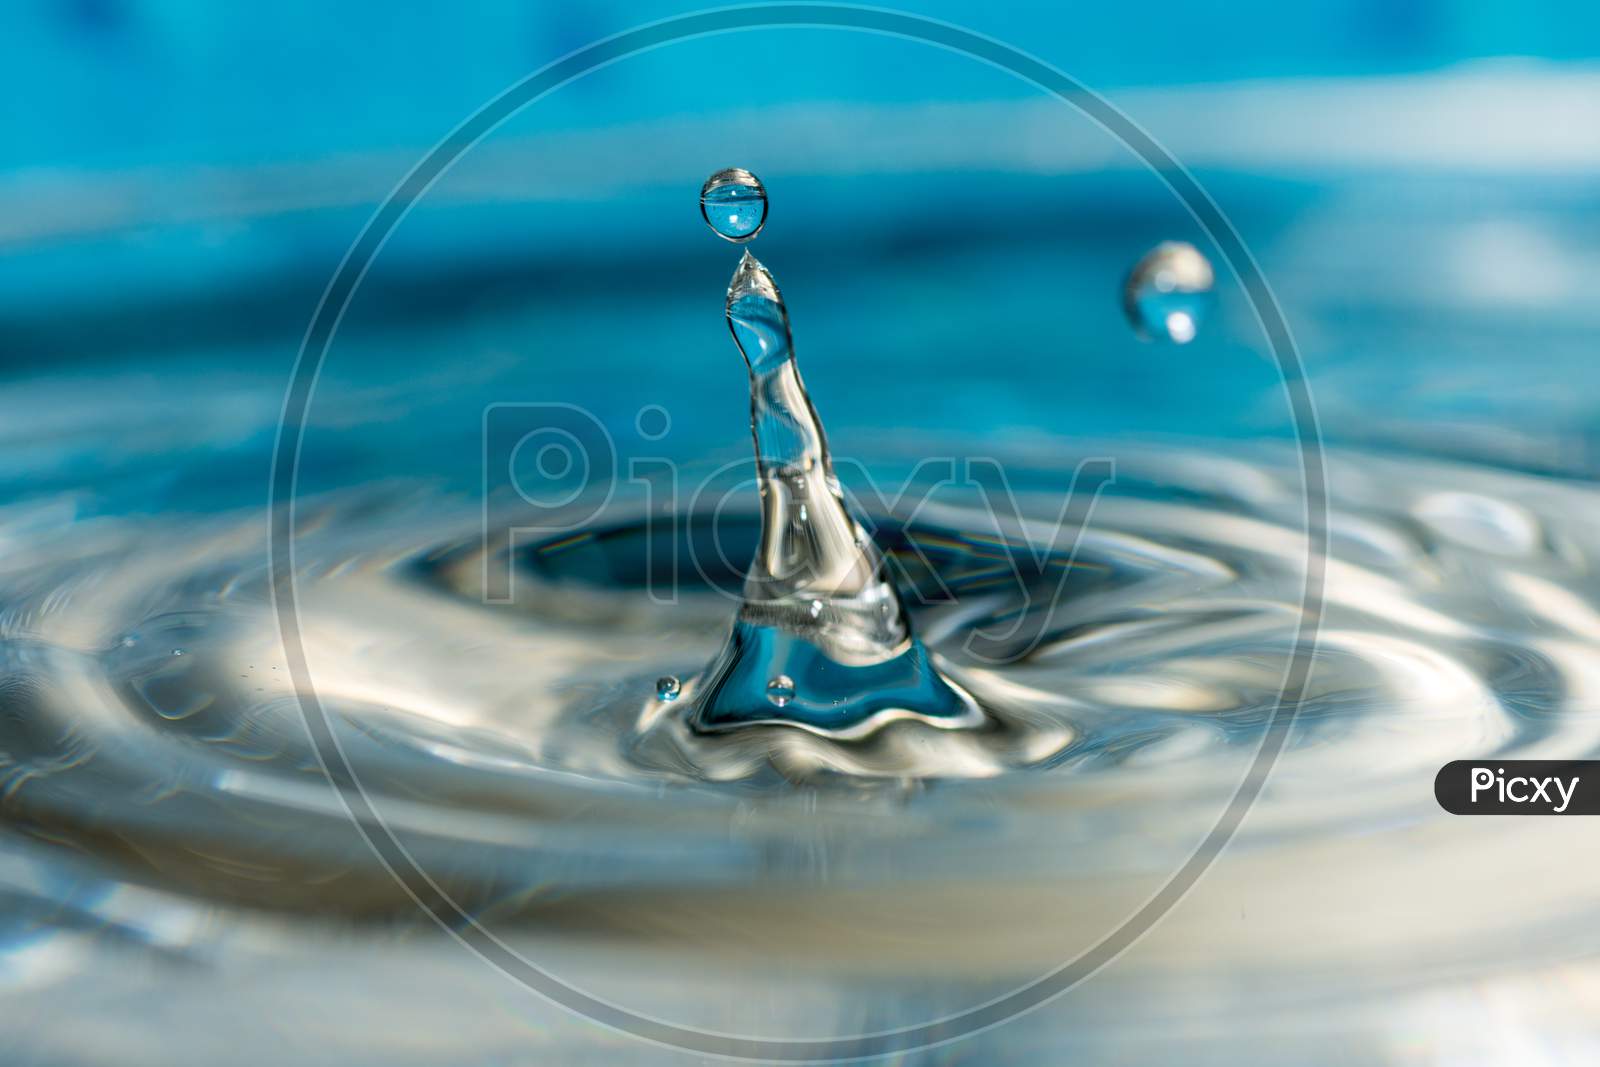 close up photo of water drops splashing creating abstract shape